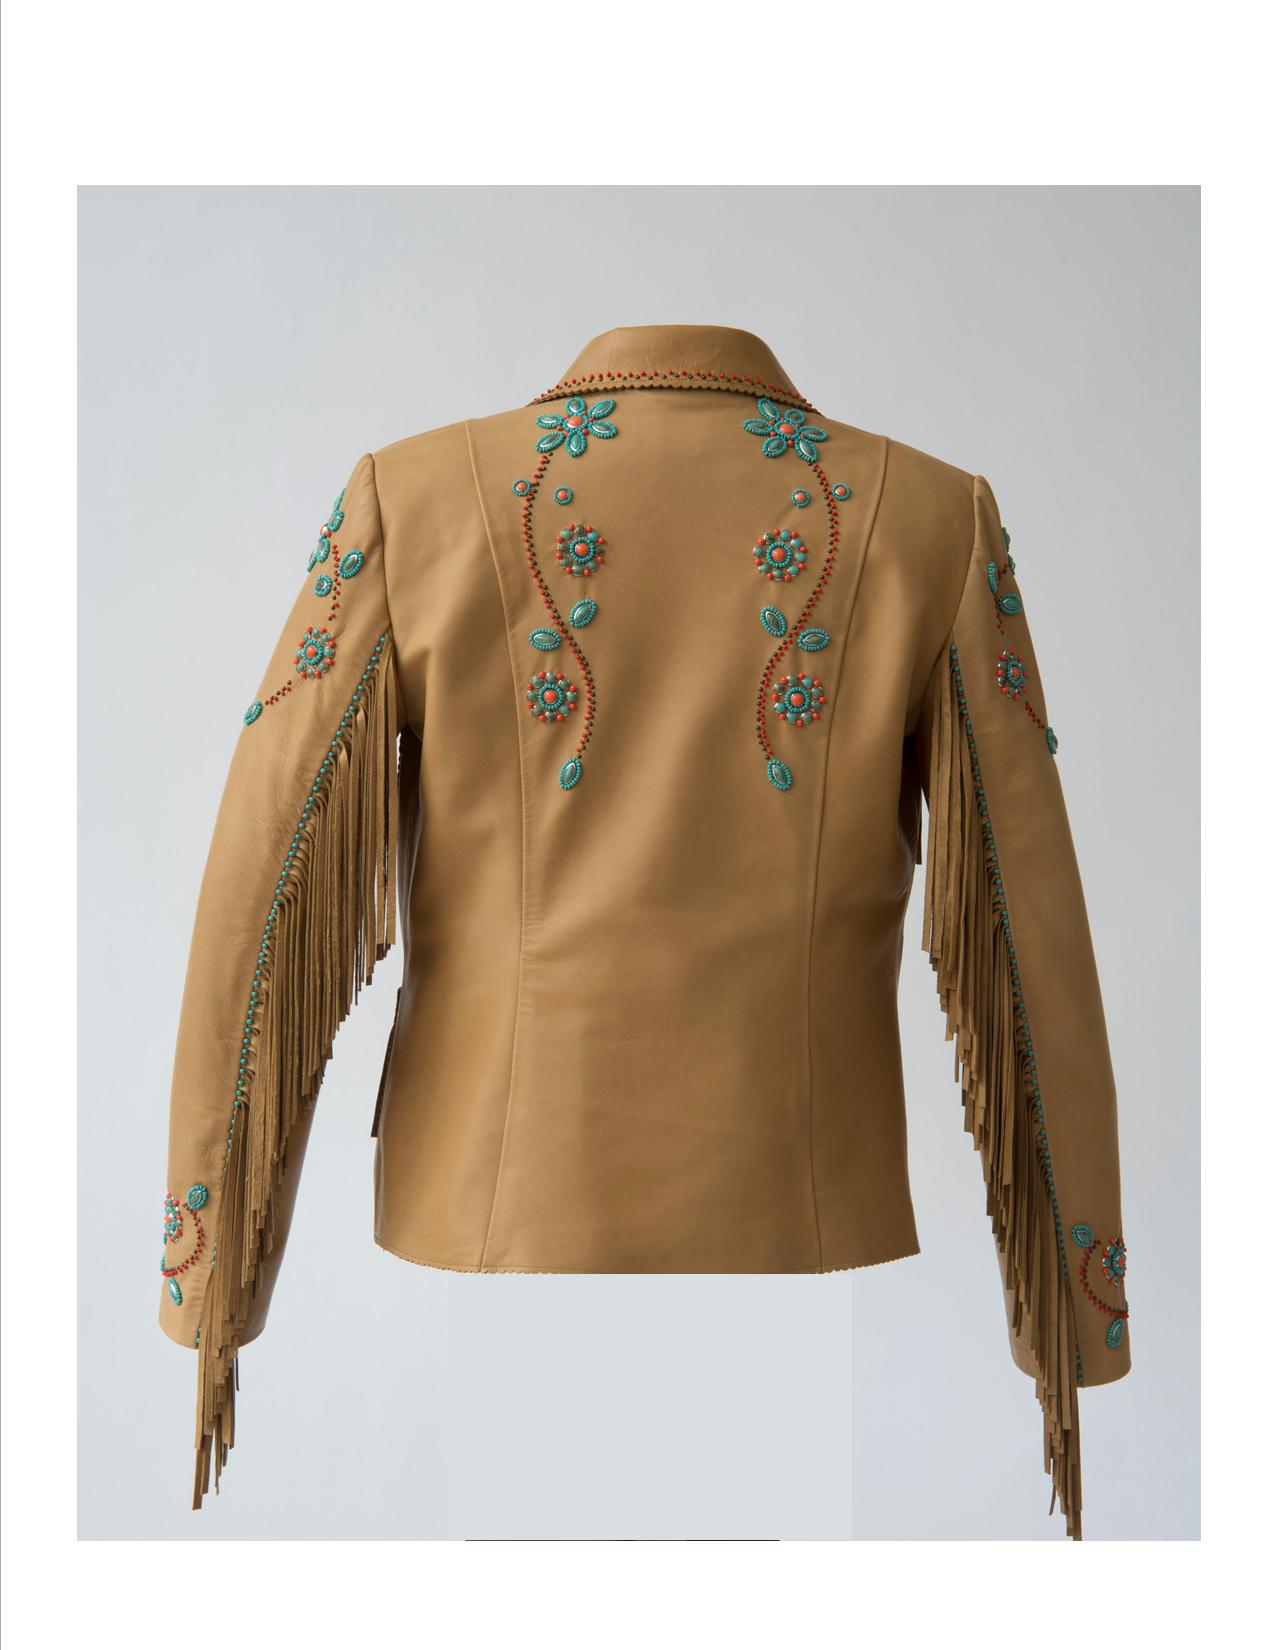 Jan Faulkner's Buffalo Bill-inspired jacket: back